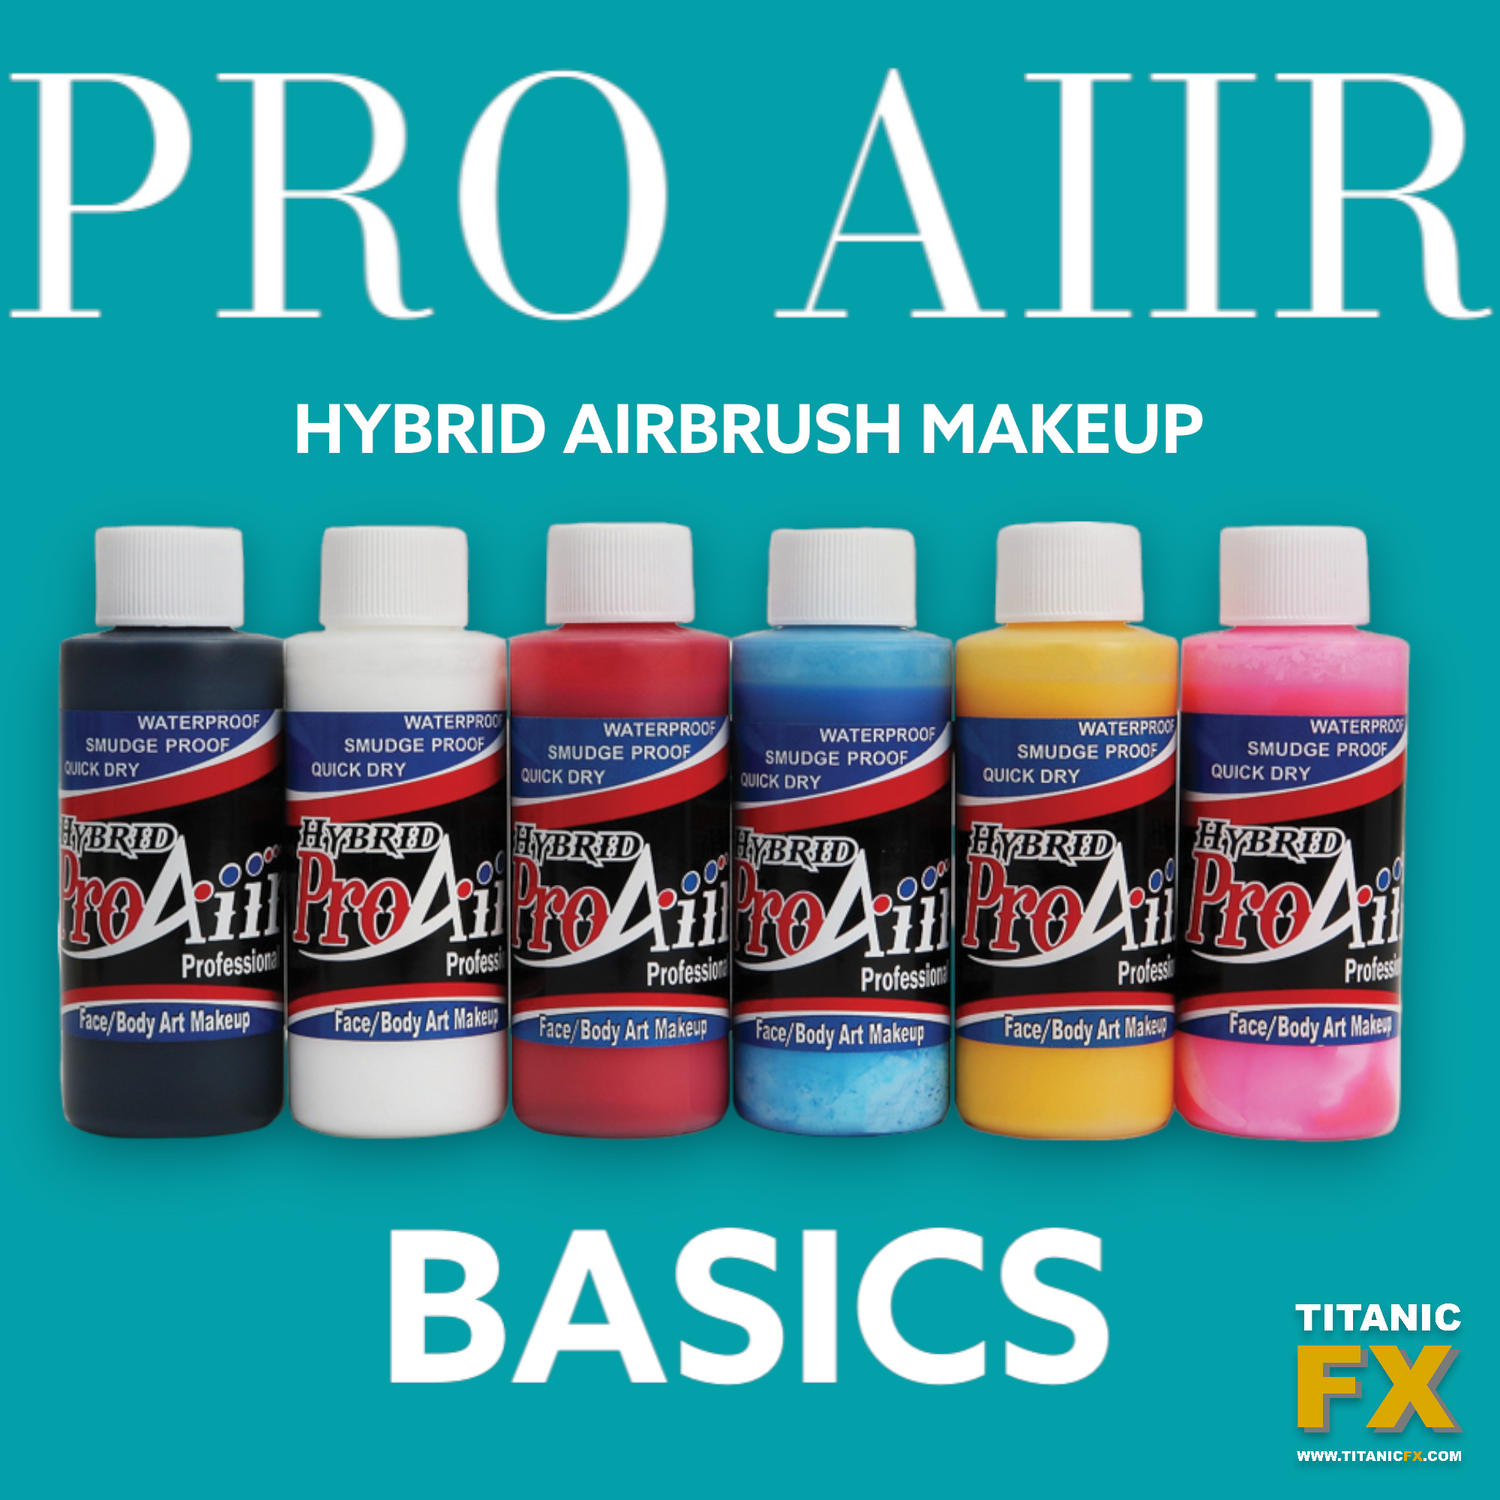 Pro Aiir Hybrid Airbrush Makeup Kit - 'Basics / Standard'